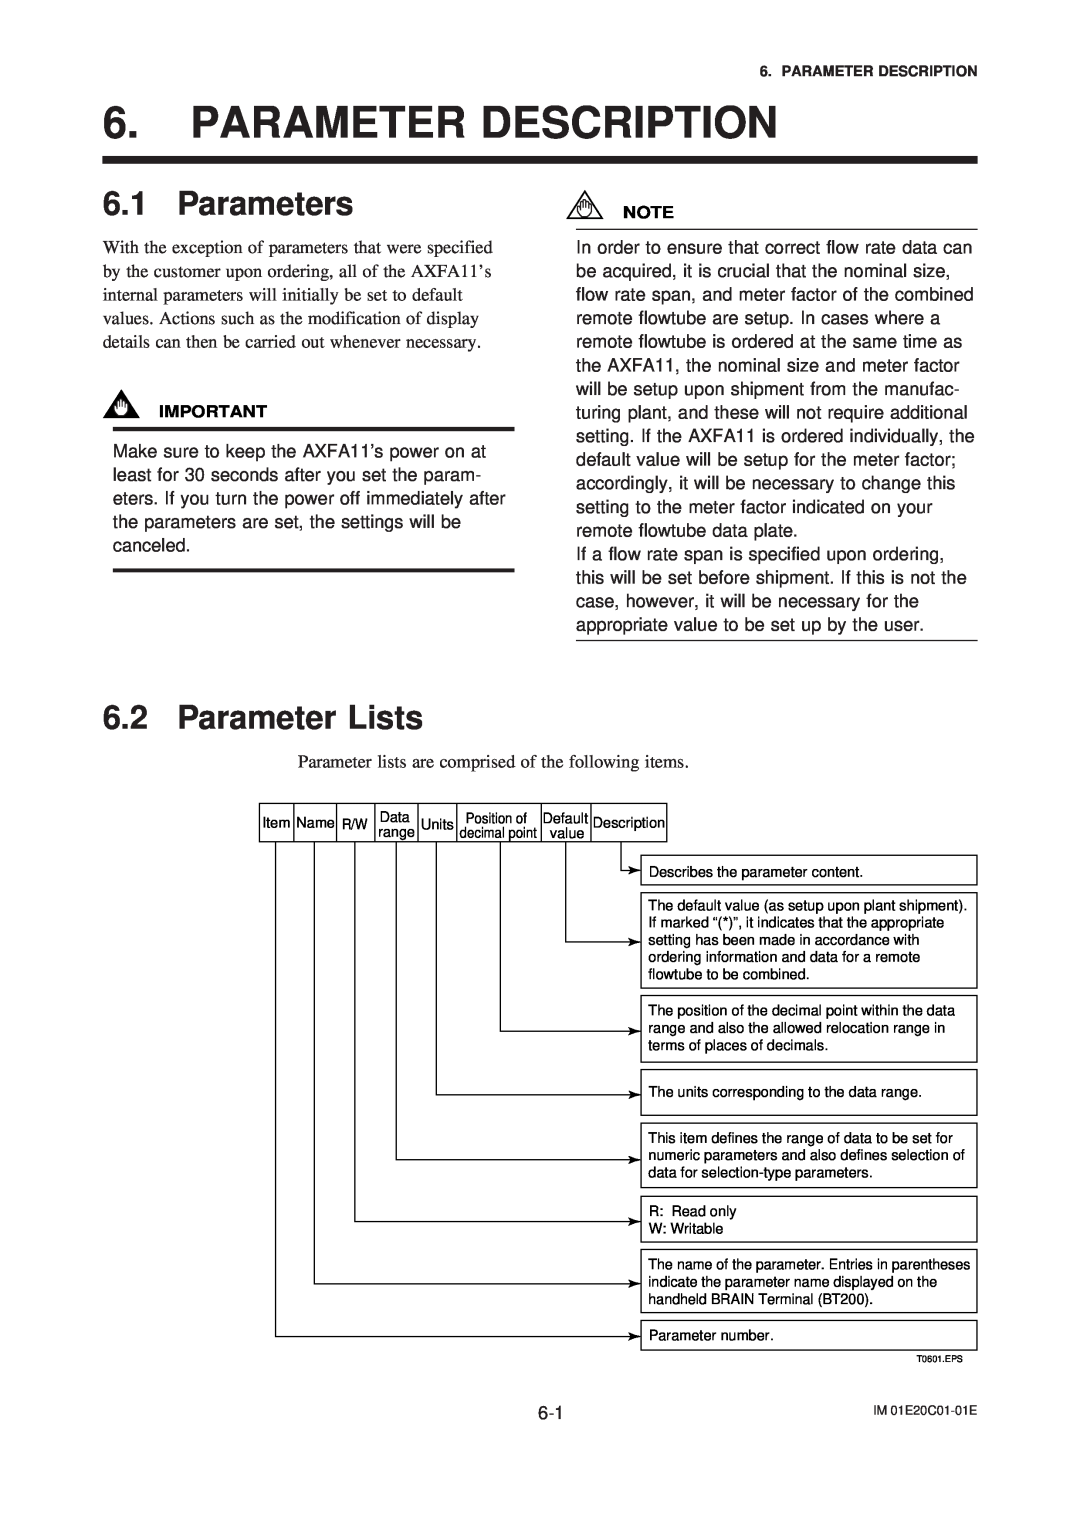 APC AXFA11G user manual Parameters, Parameter Lists, Parameter Description 